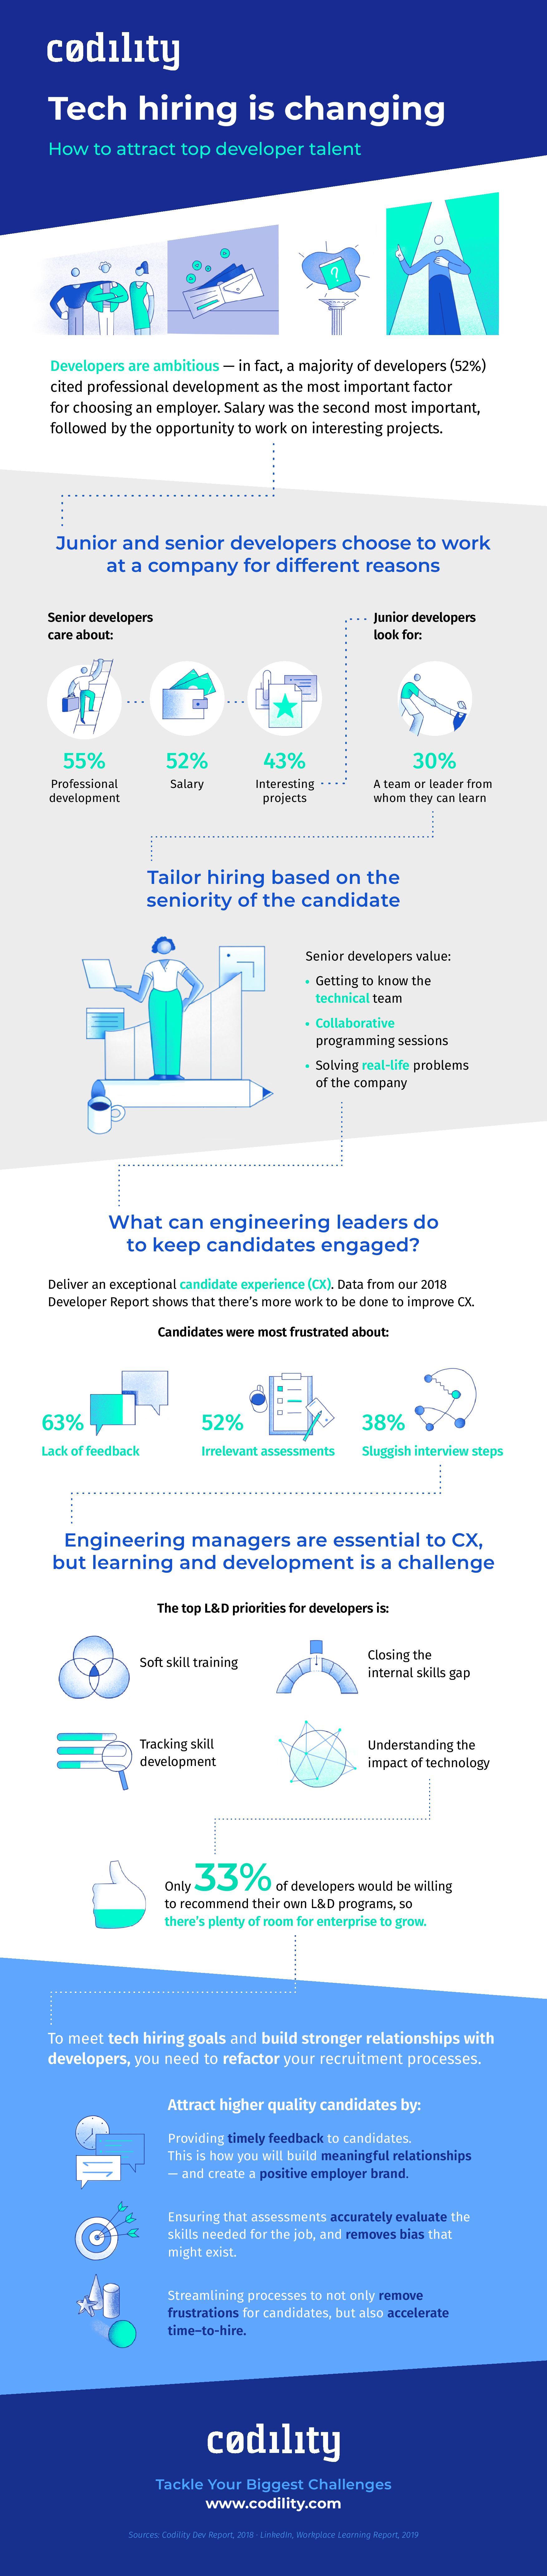 Codility tech hiring infographic